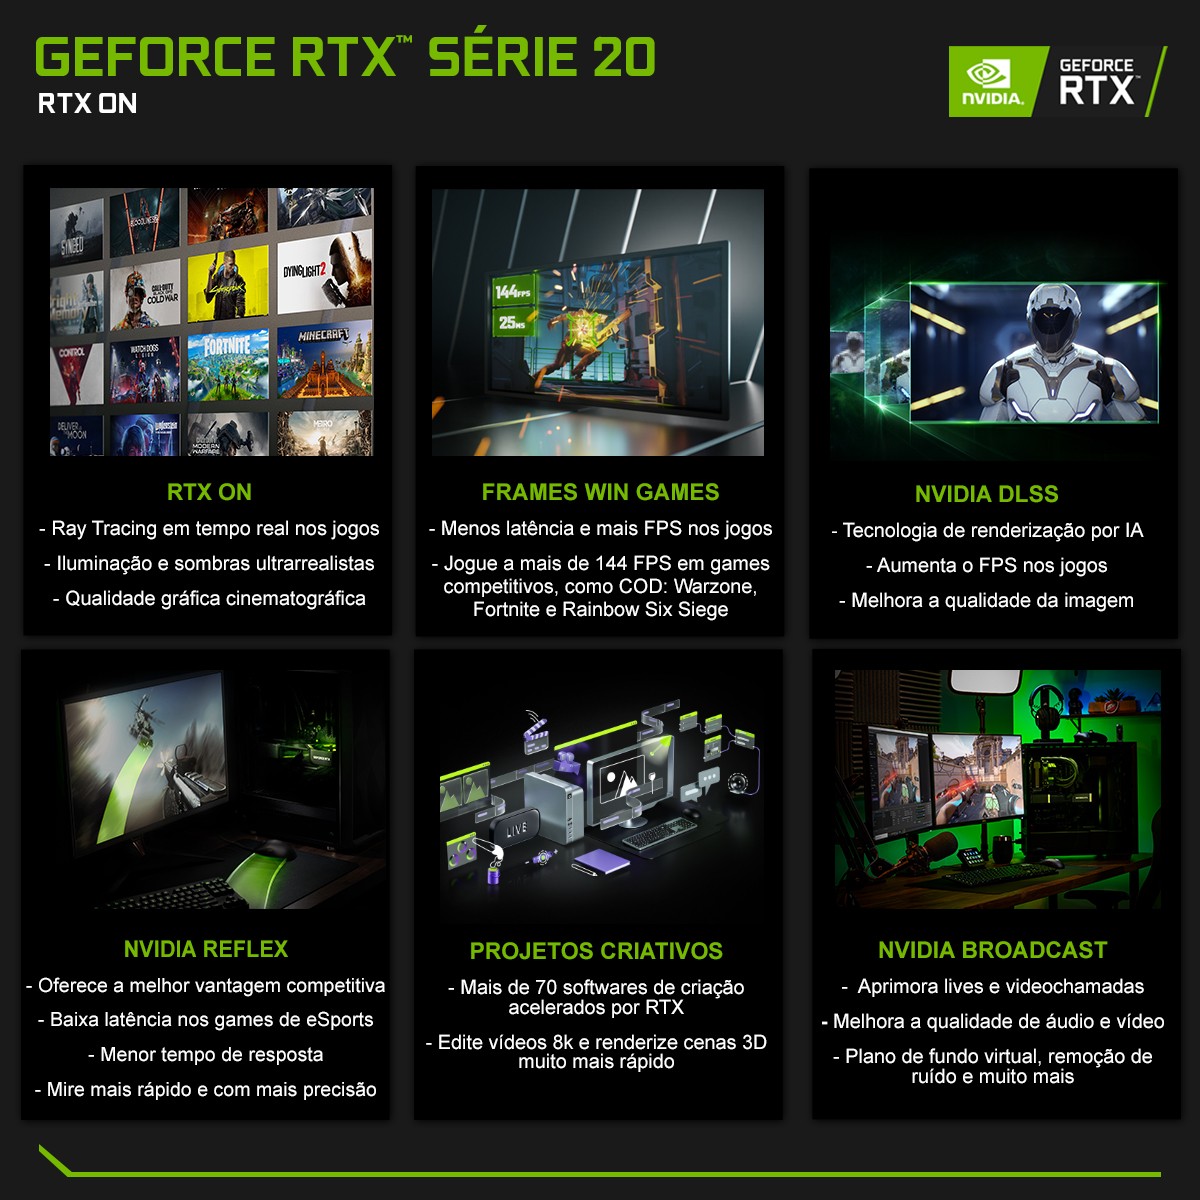 Placa De Vídeo Gainward Geforce RTX 2070 Phantom, 8GB GDDR6, 256Bit